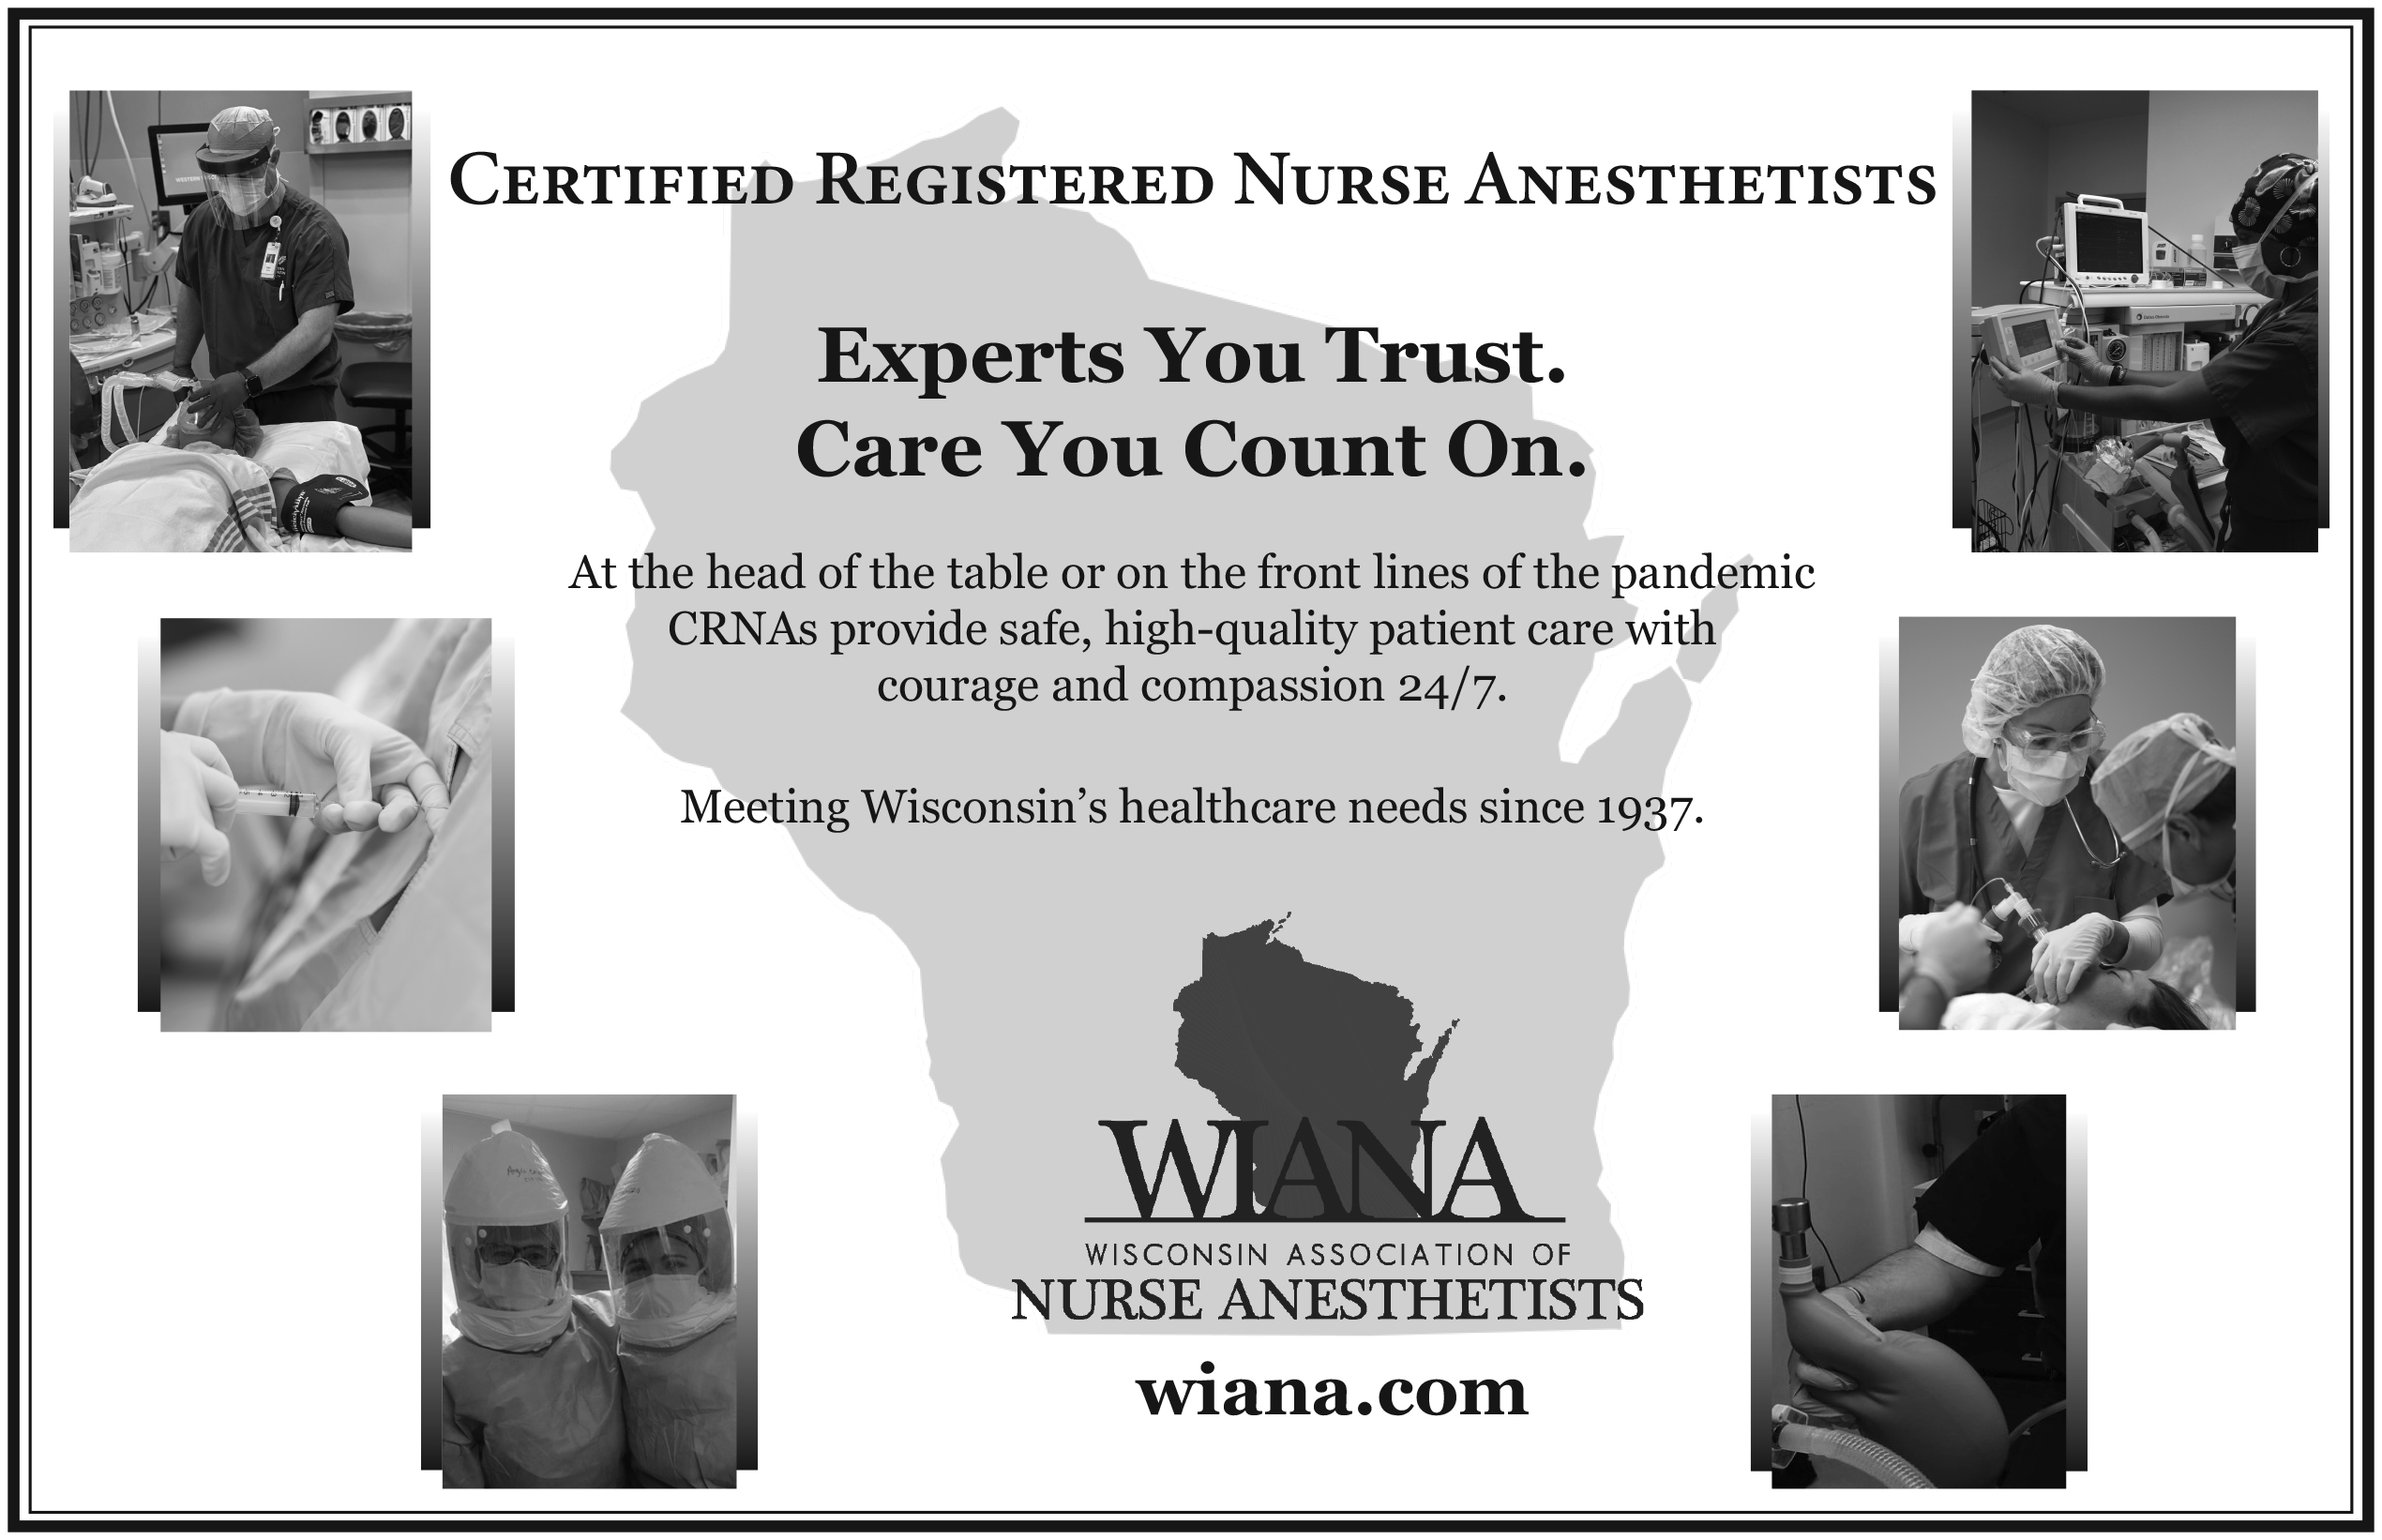 Wisconsin Association of Nurse Anesthetists 